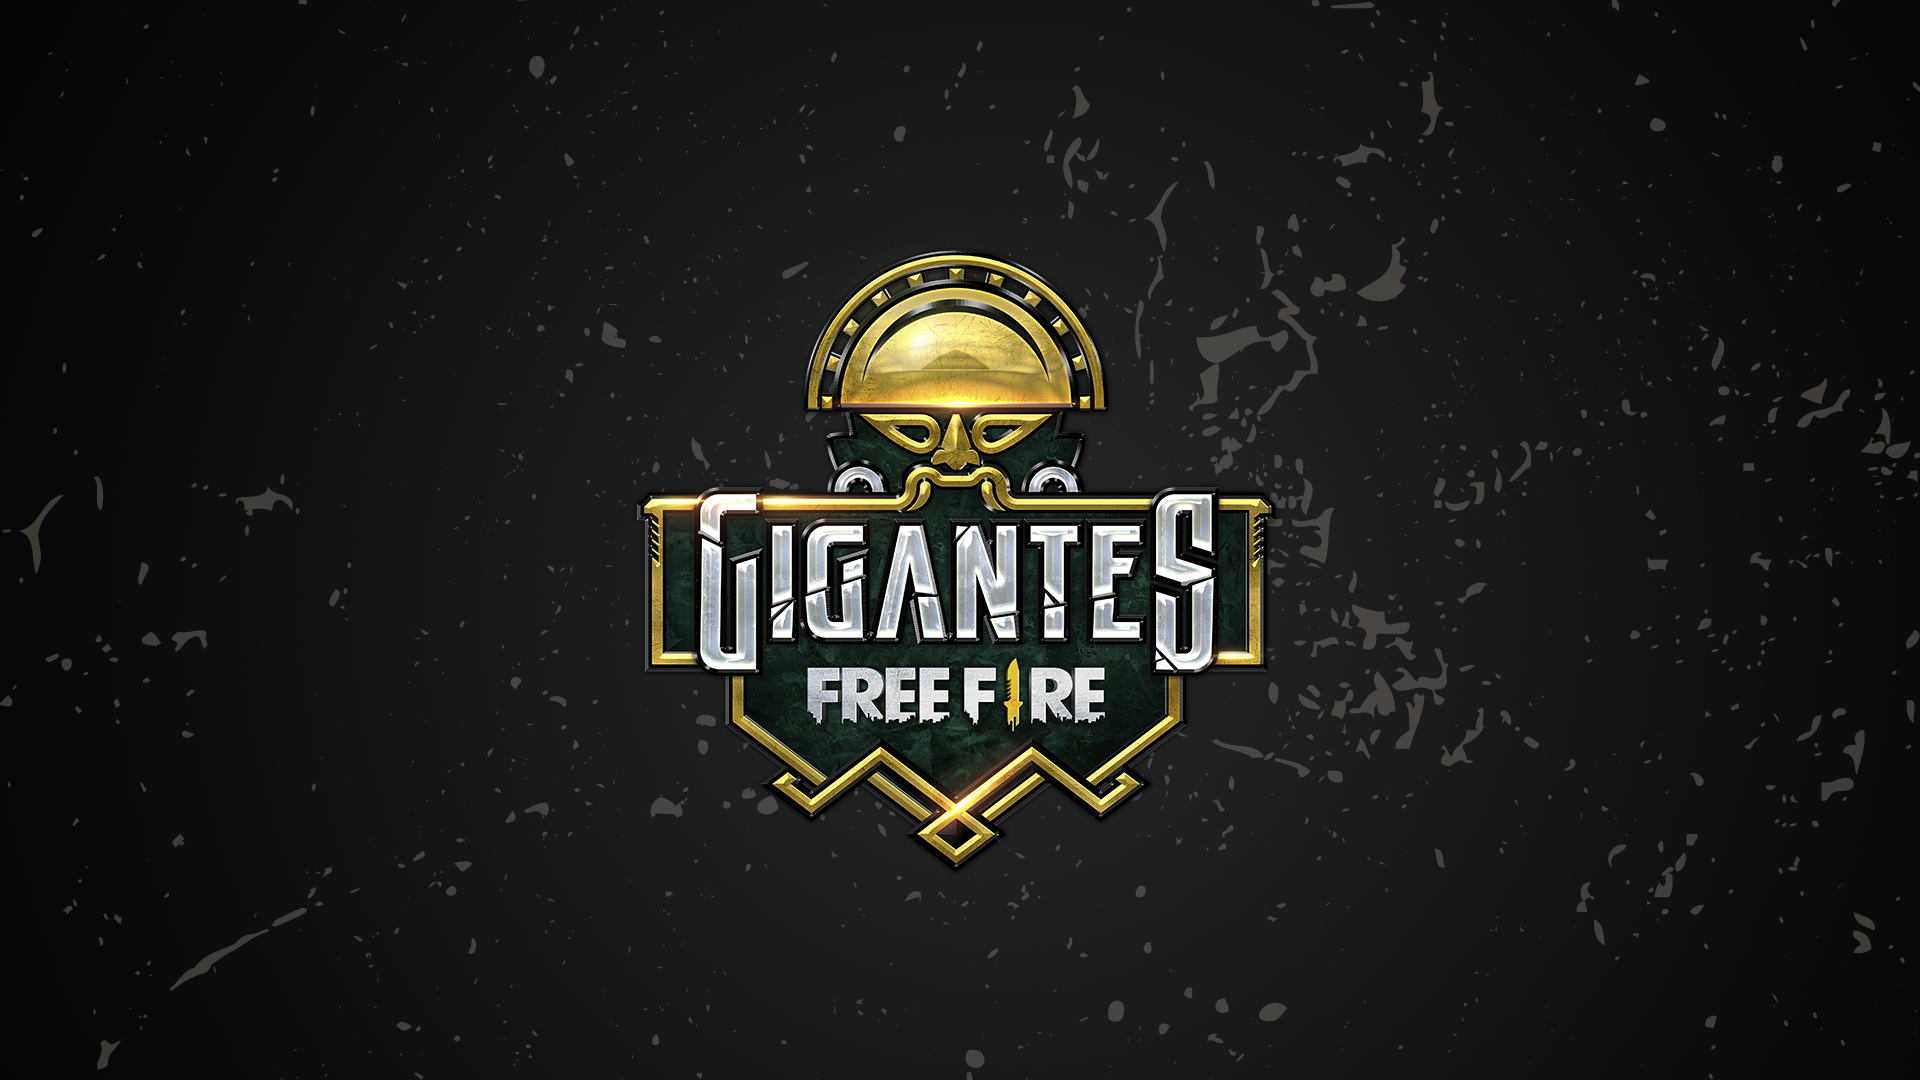 Gigantes Free Fire